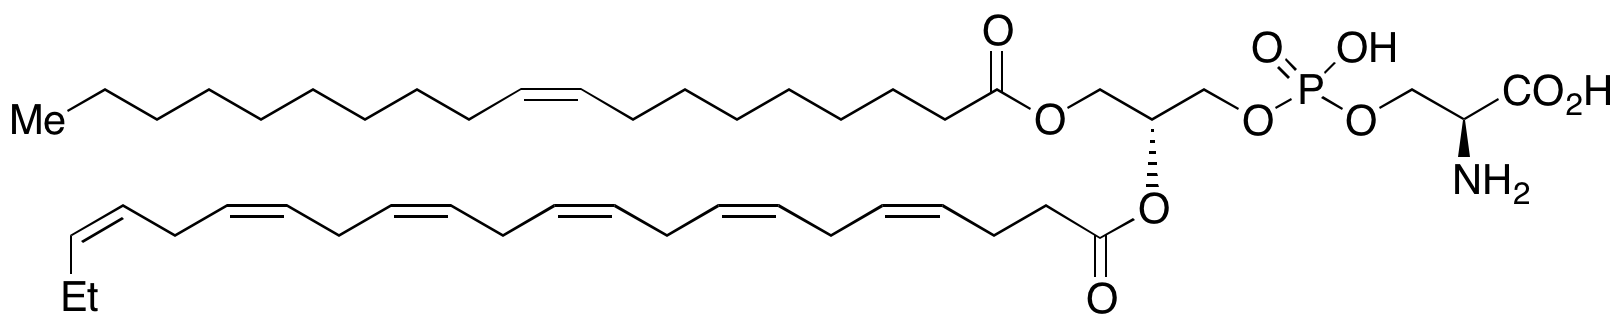 1-Nonadec-9Z-enoyl-2-docosahexaenoyl Glycero-3-phosphoserine